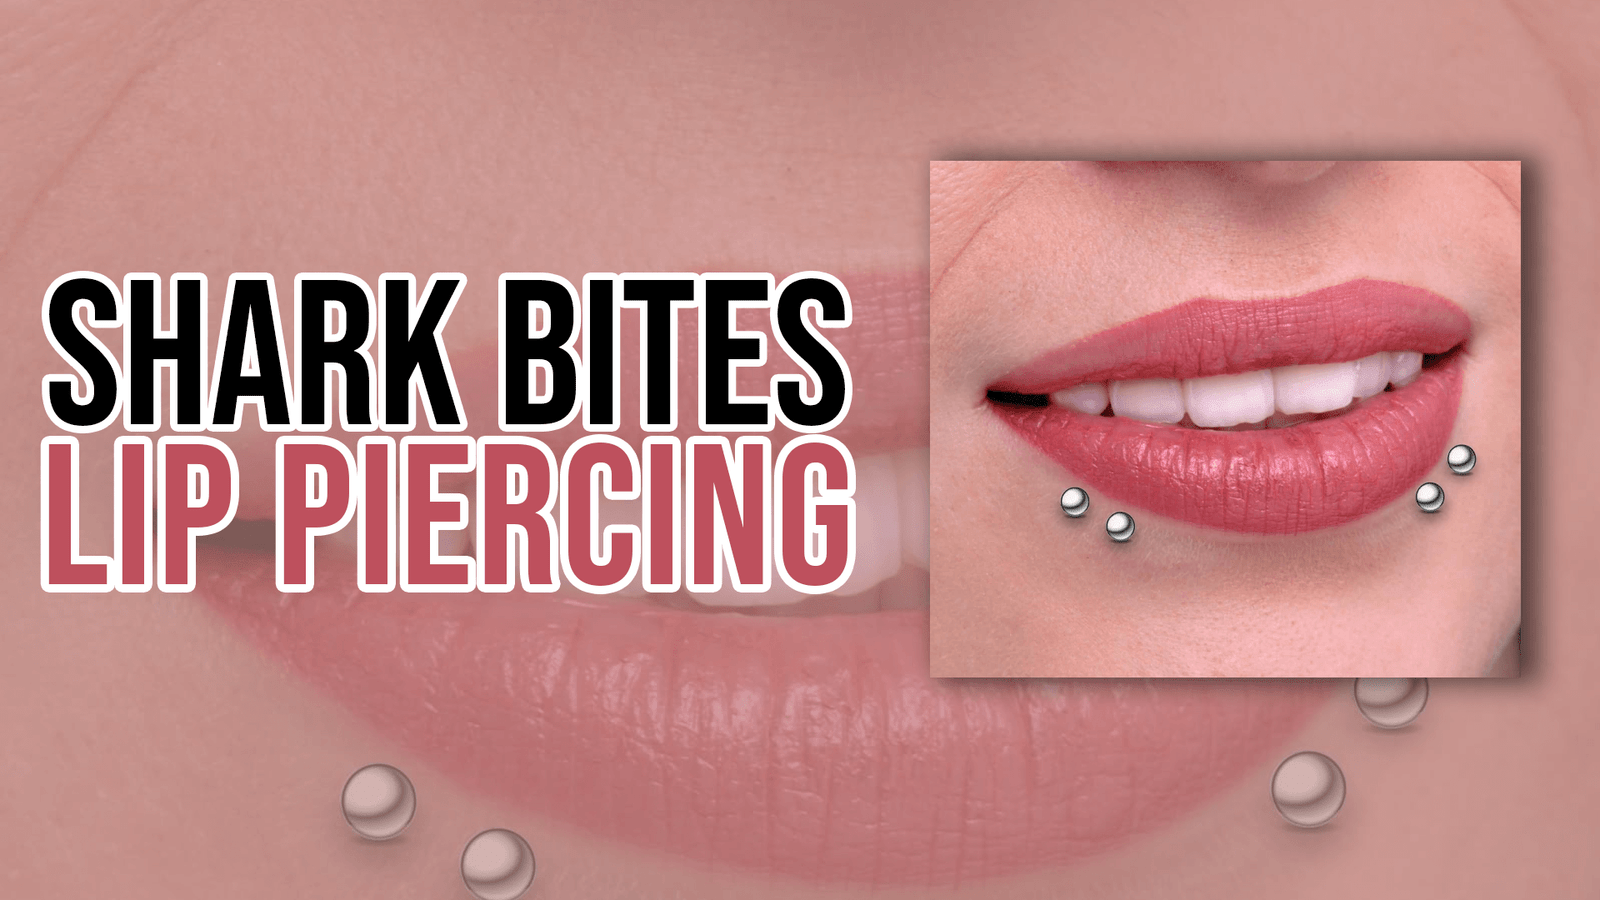 Shark Bites Lip Piercing